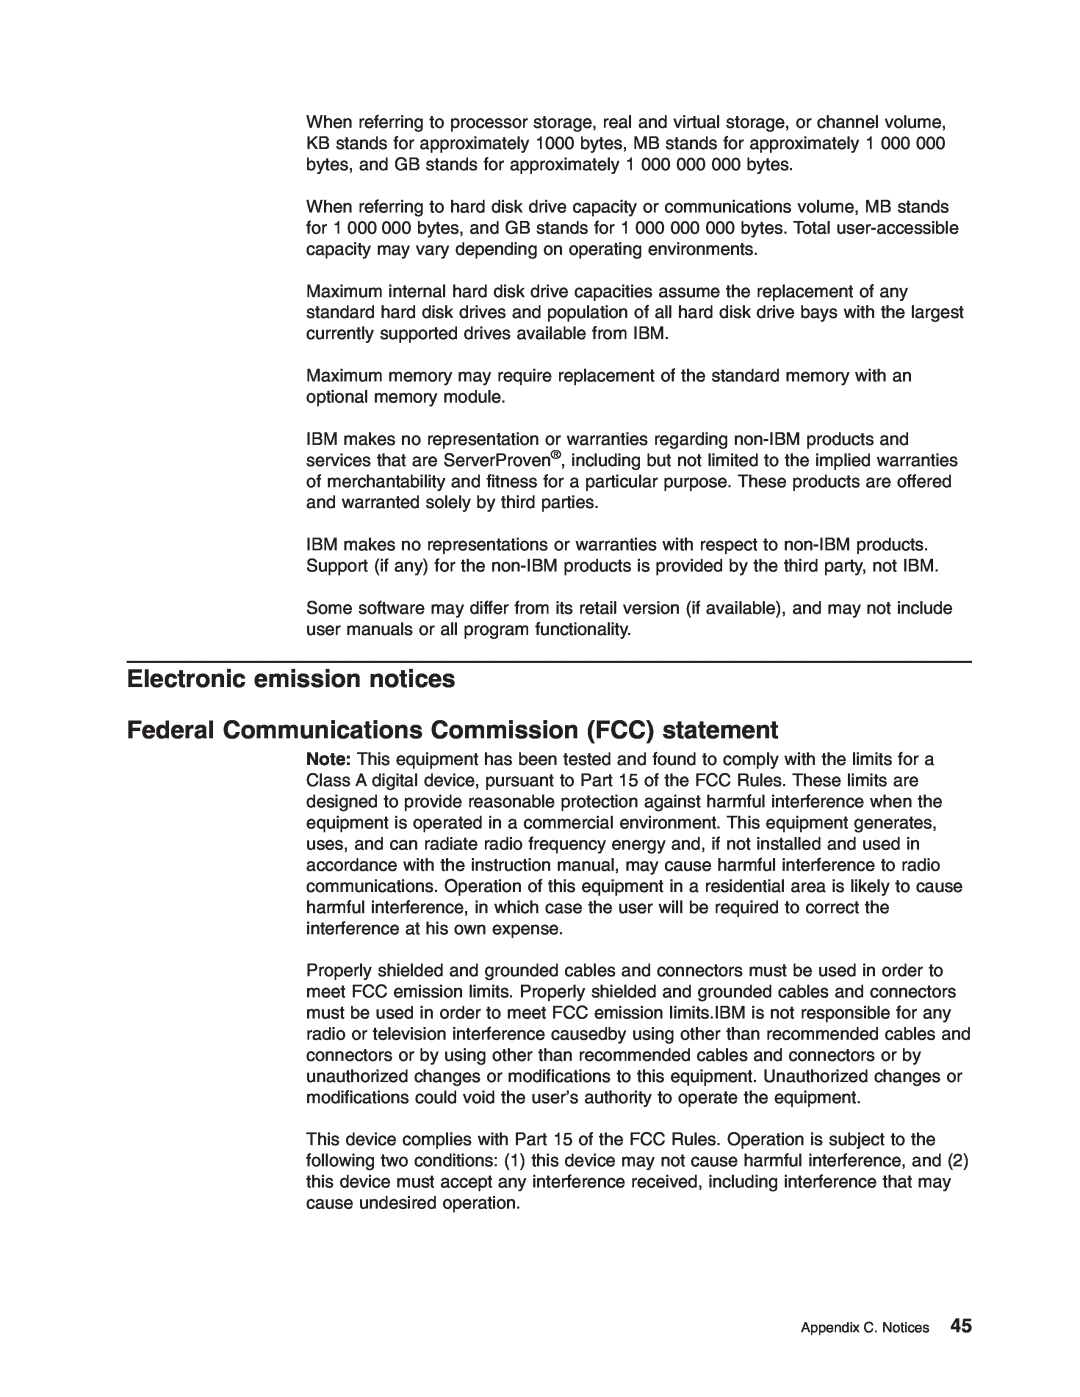 IBM xSeries 235 manual Electronic emission notices, Federal Communications Commission FCC statement, Appendix C. Notices 